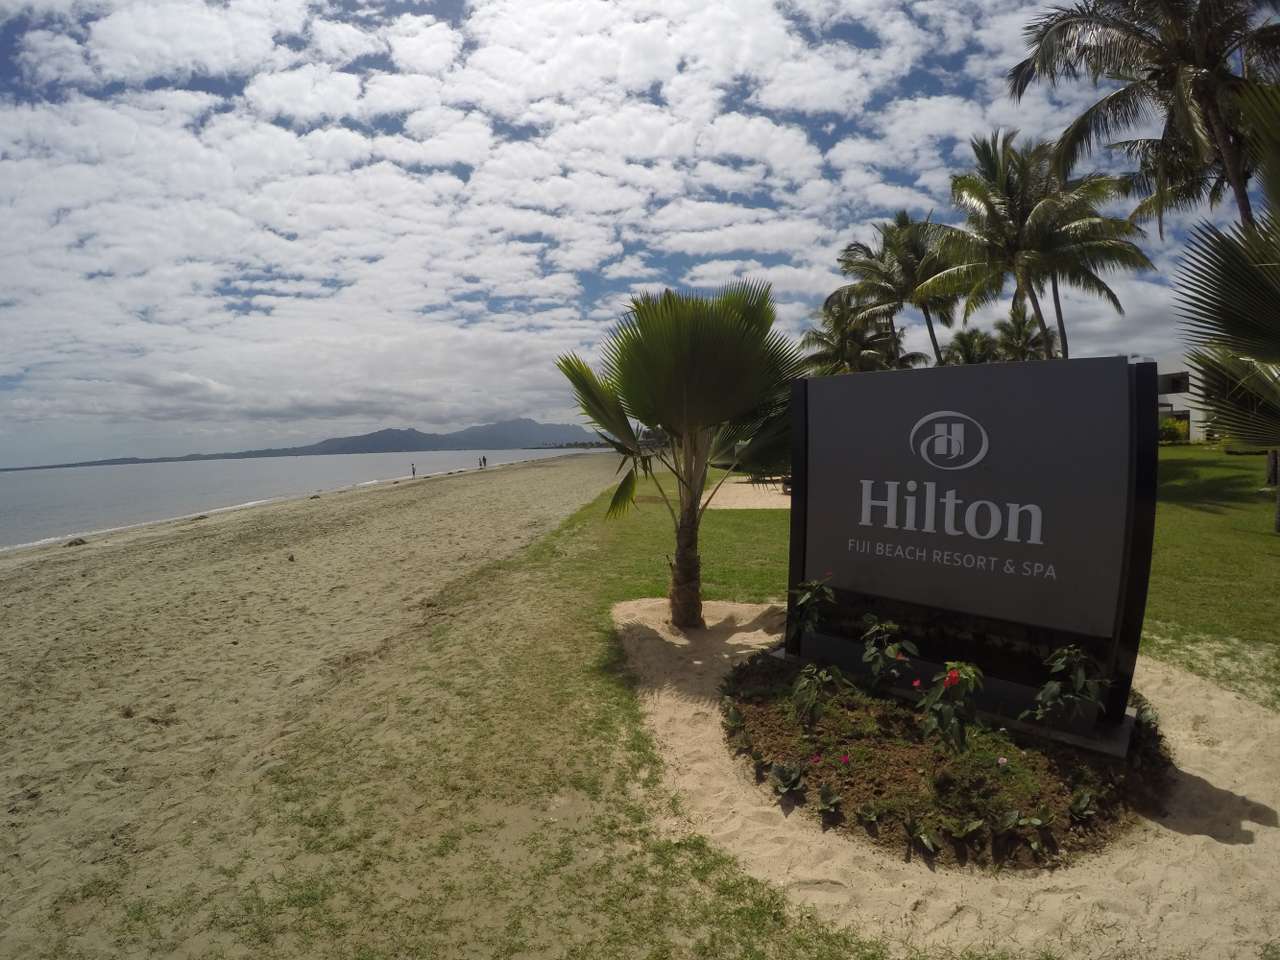 Private Transfer from Nadi Airport to Hilton Fiji Beach Resort & Spa